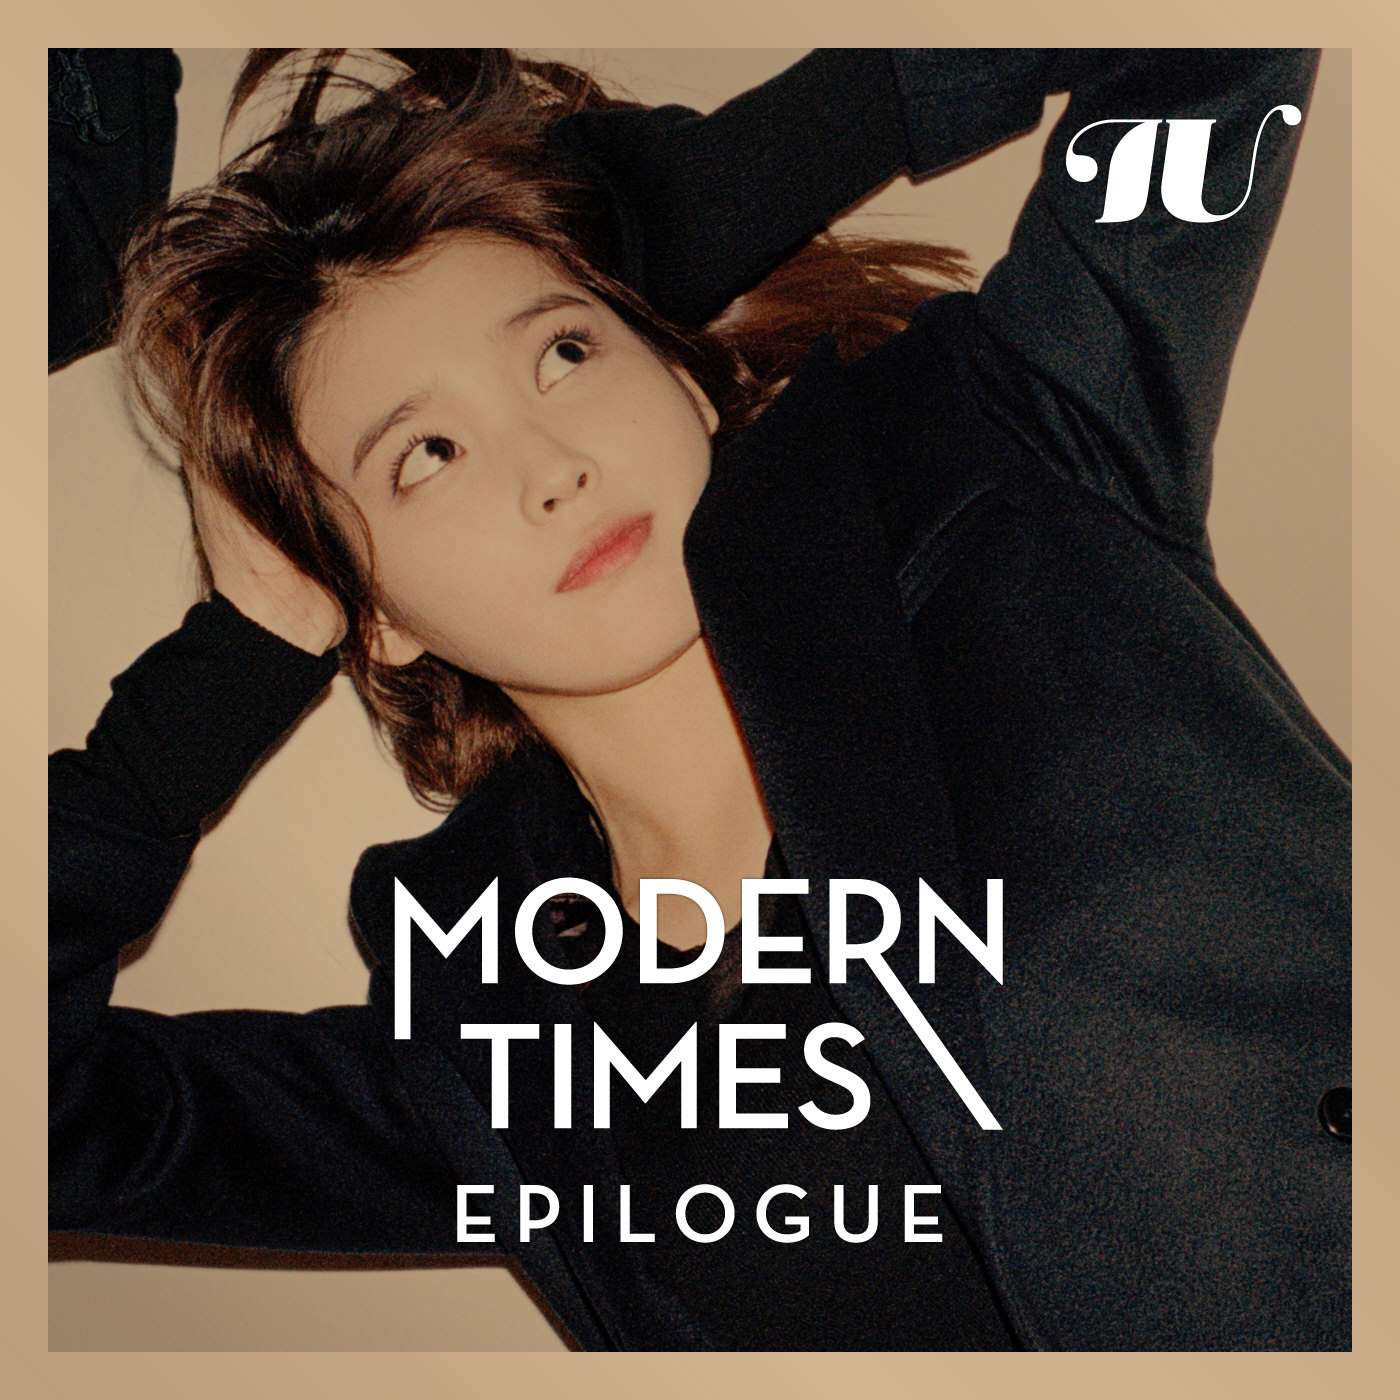 [Album] IU - Modern Times - Epilogue (Repackage)